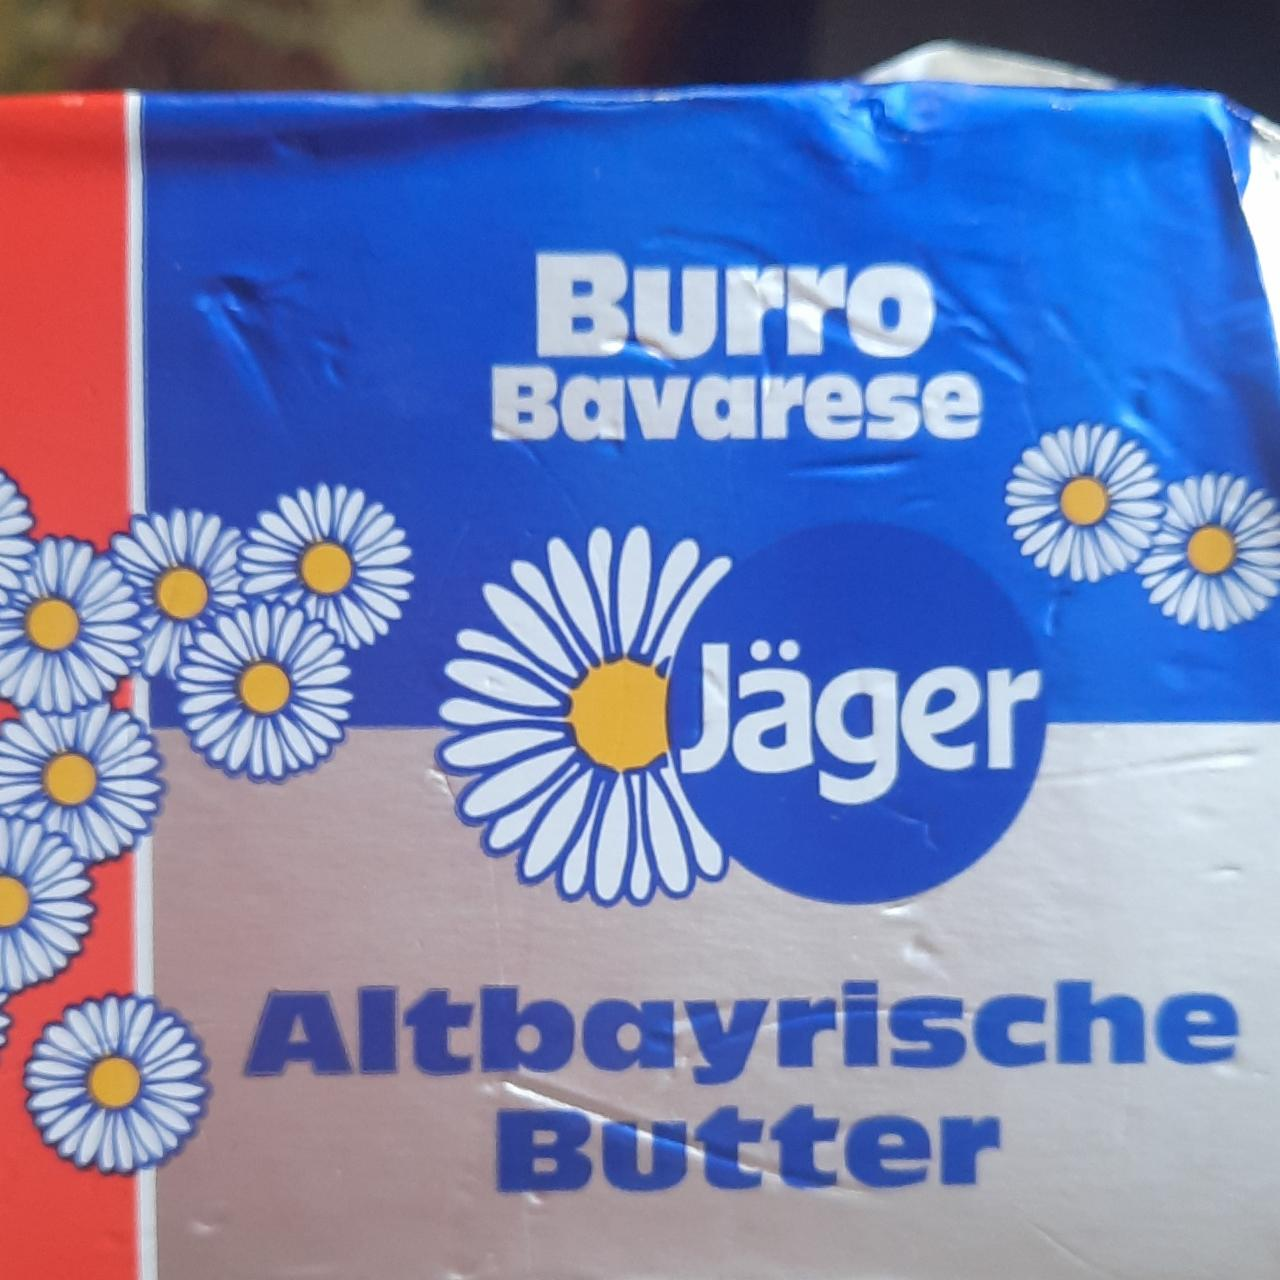 Фото - Масло сладкосливочное Altbayrische Butter Burro Bavarese Jager